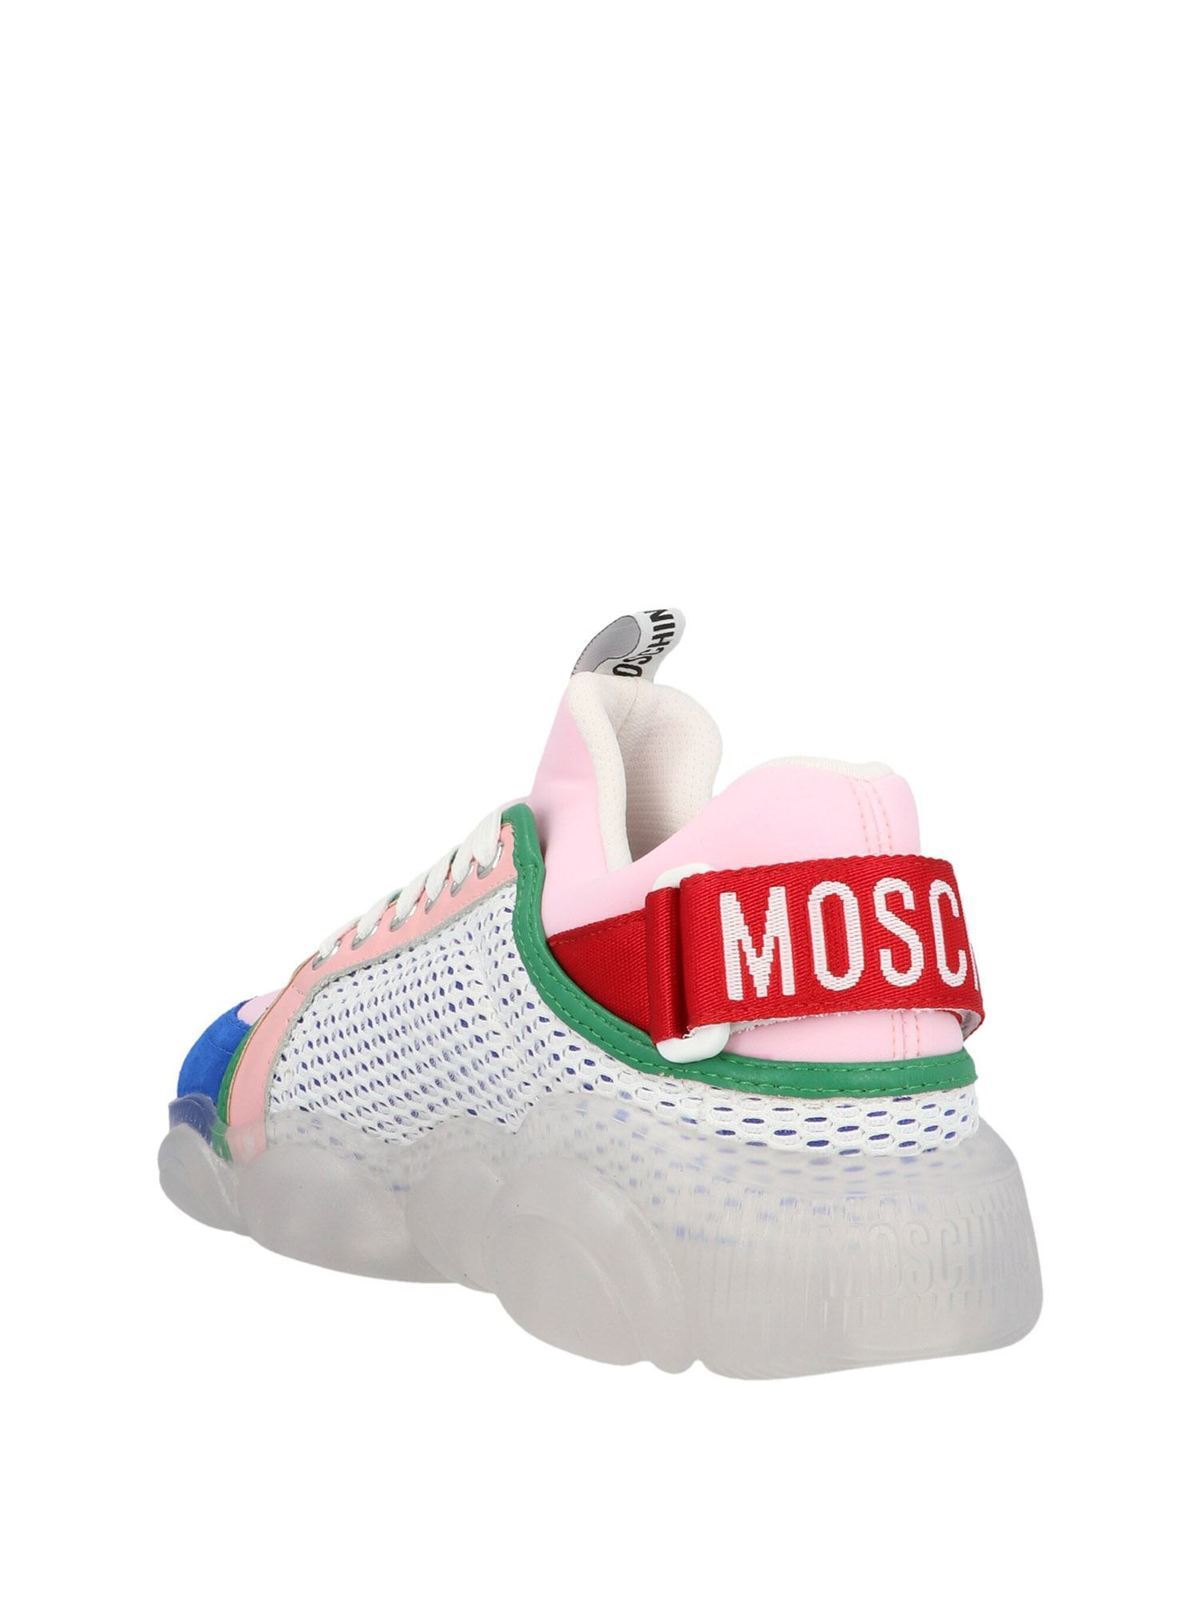 Buy Moschino Teddy Footwear online - Men - 55 products | FASHIOLA.in